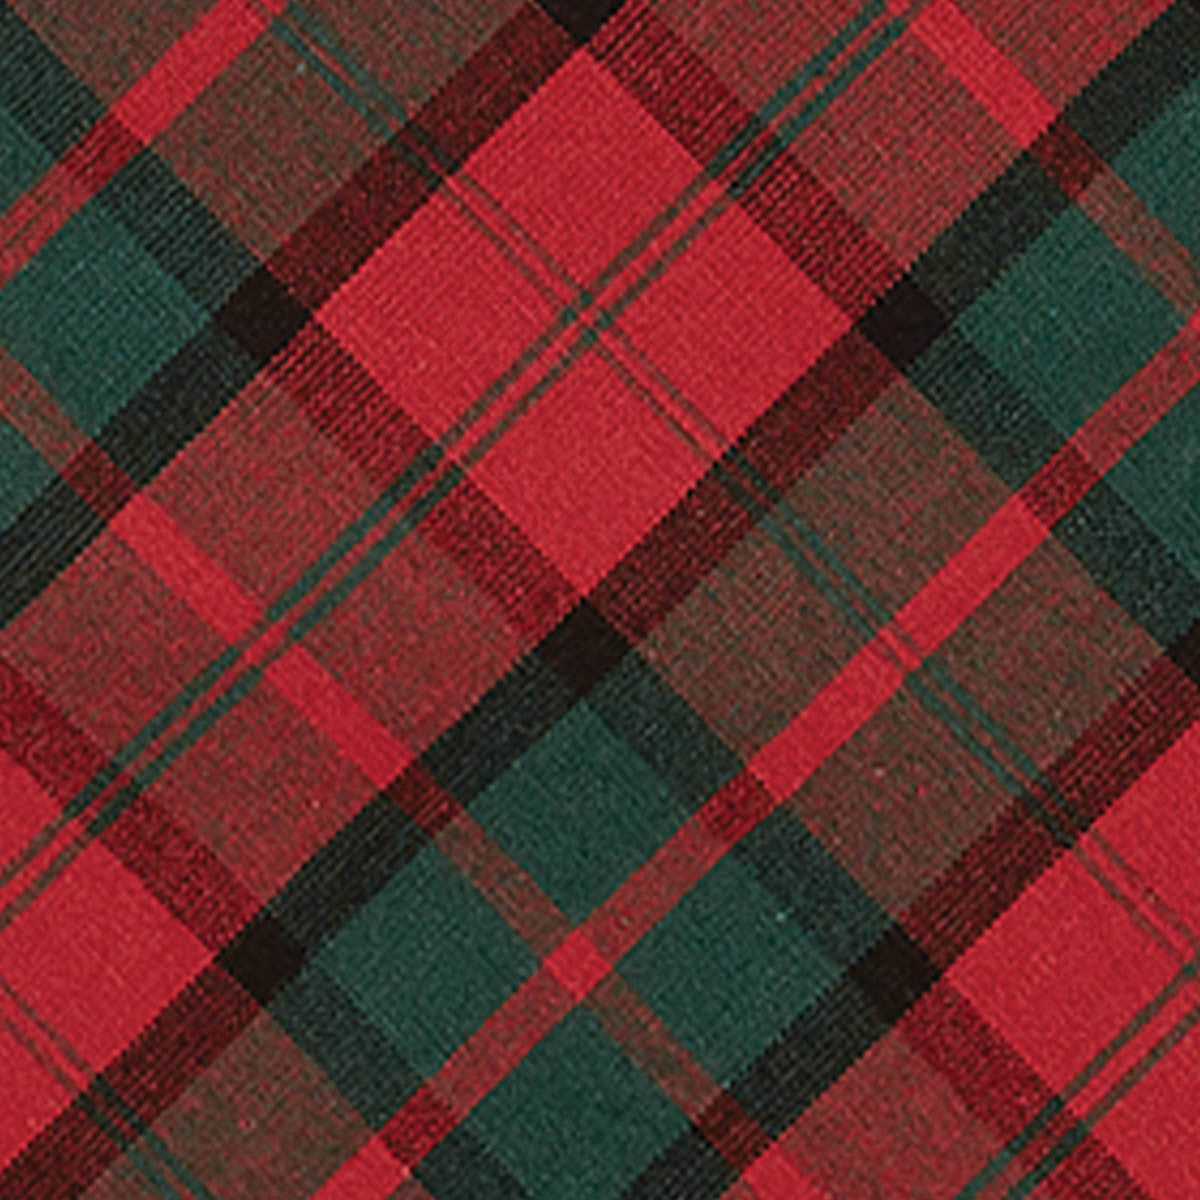 Winter Pines Tablecloth - 54x54 Park Designs